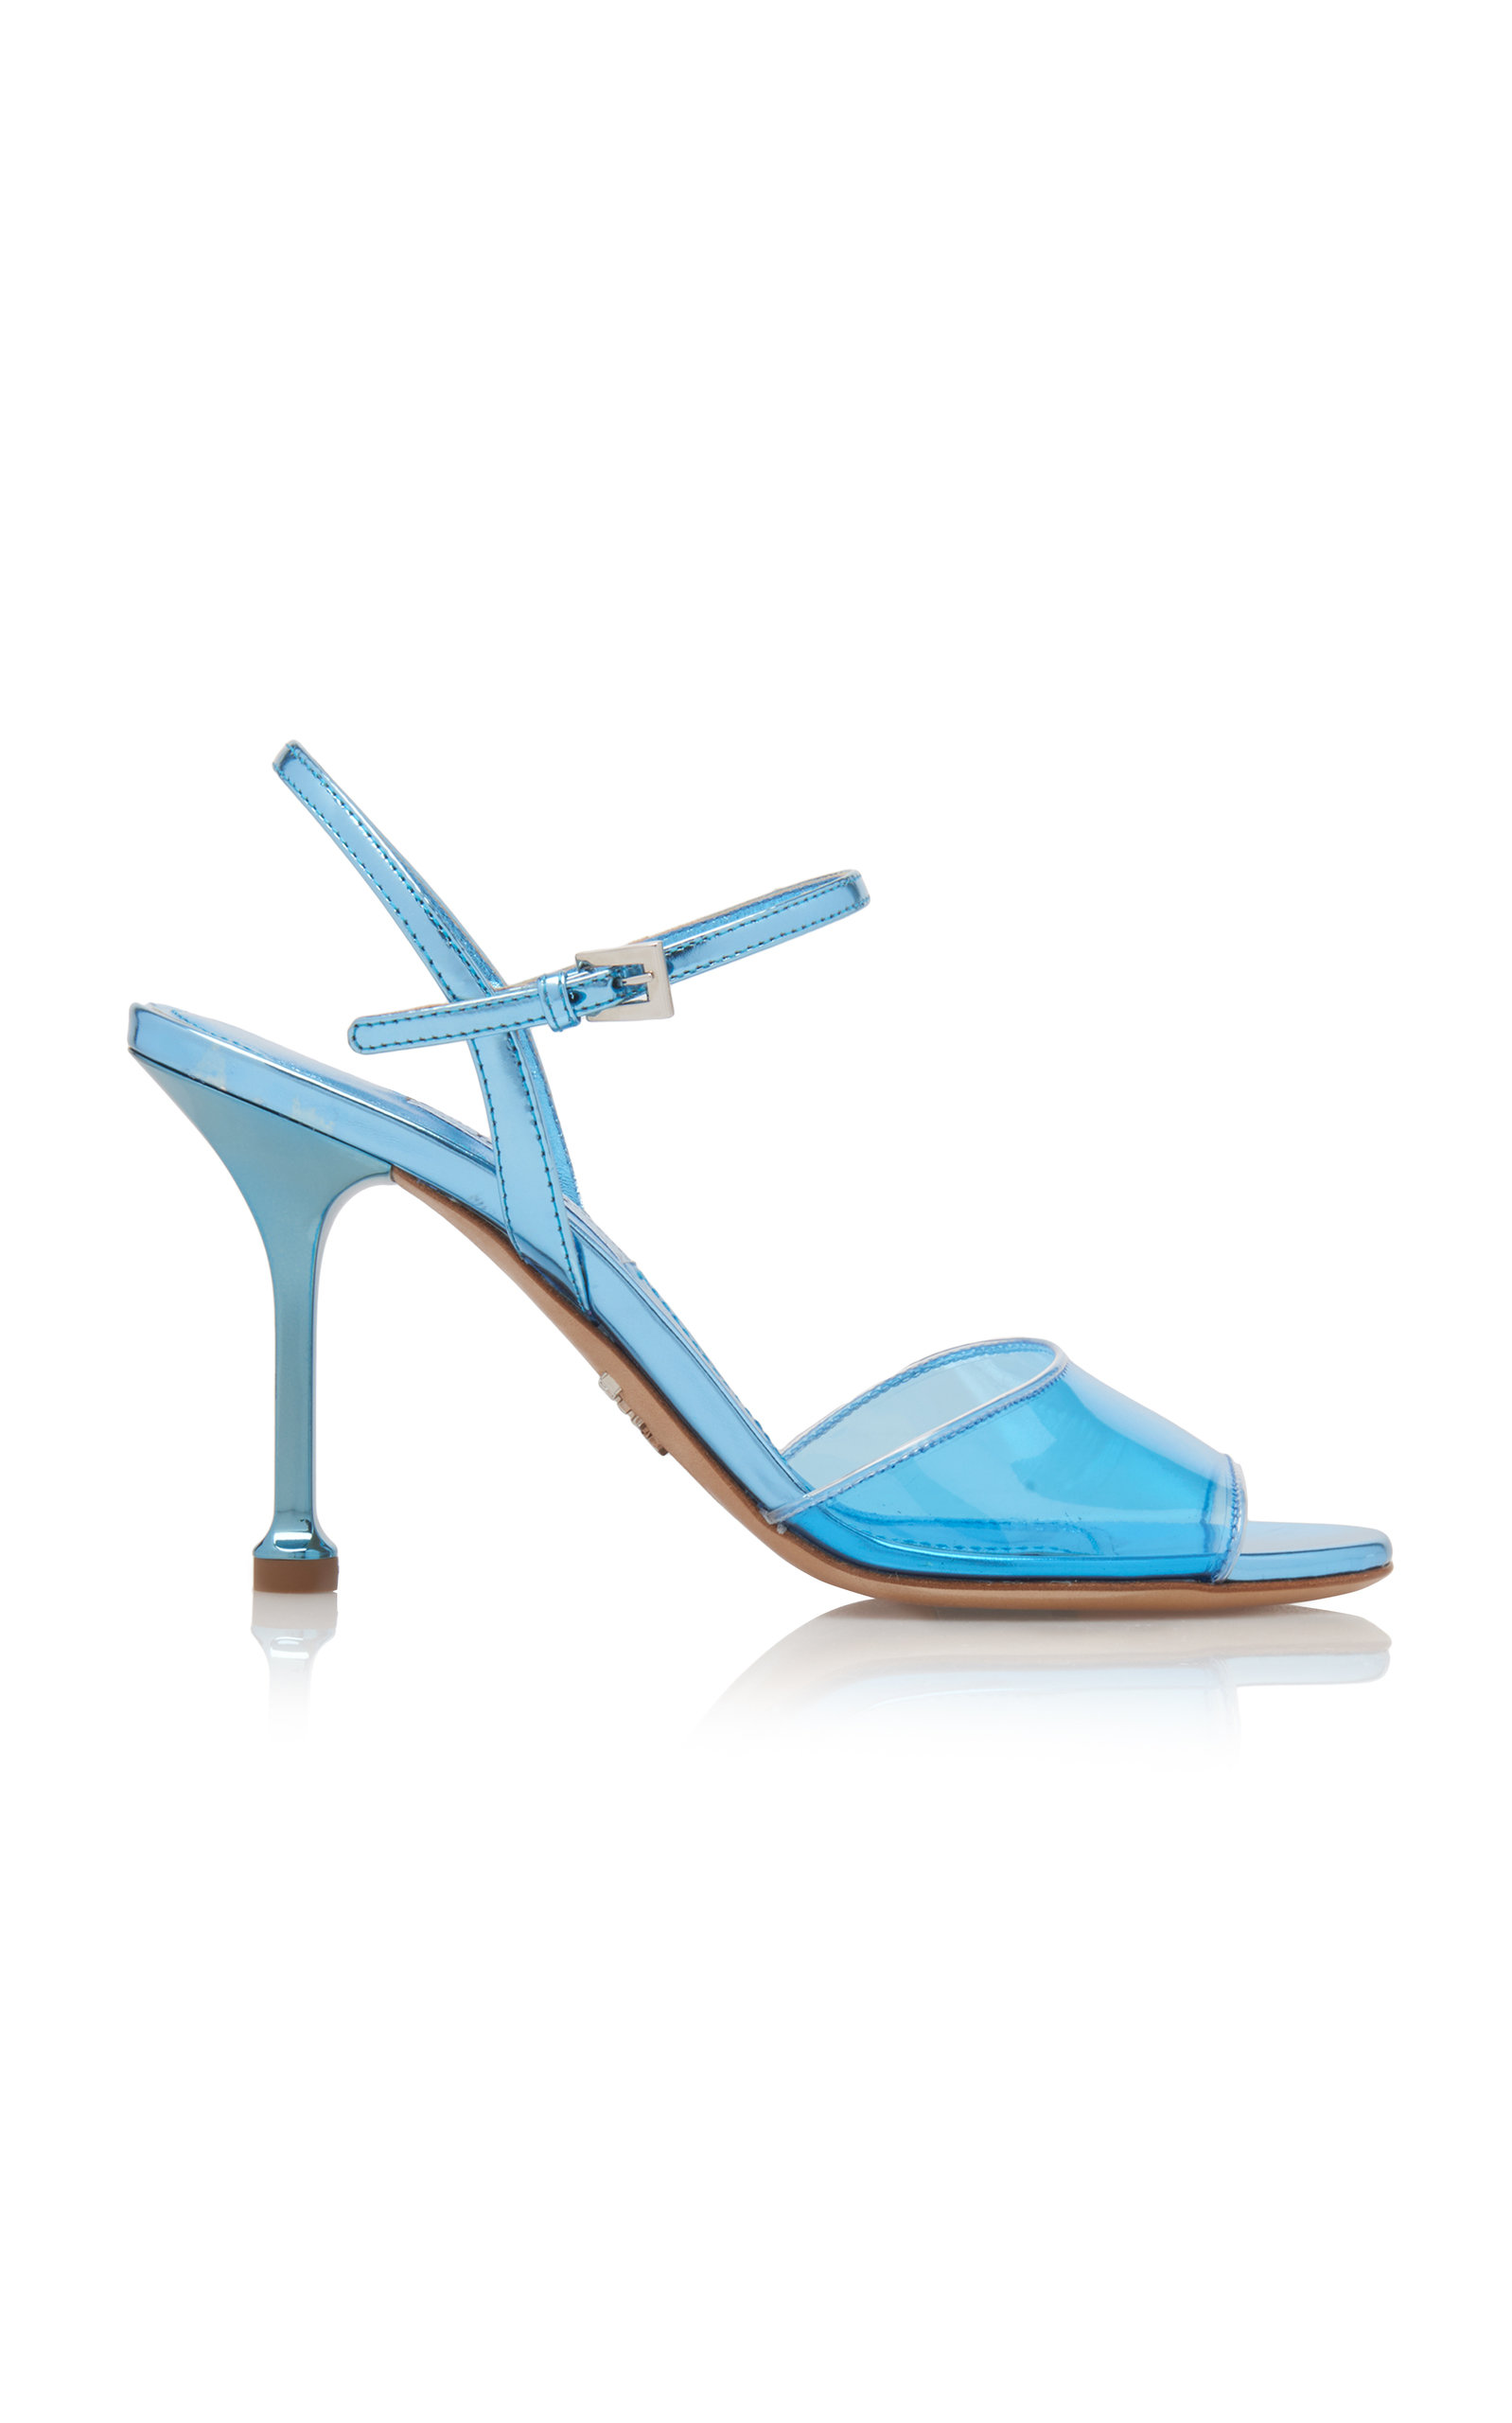 Prada - Women's Translucent Sandals  - Blue/gold - Moda Operandi